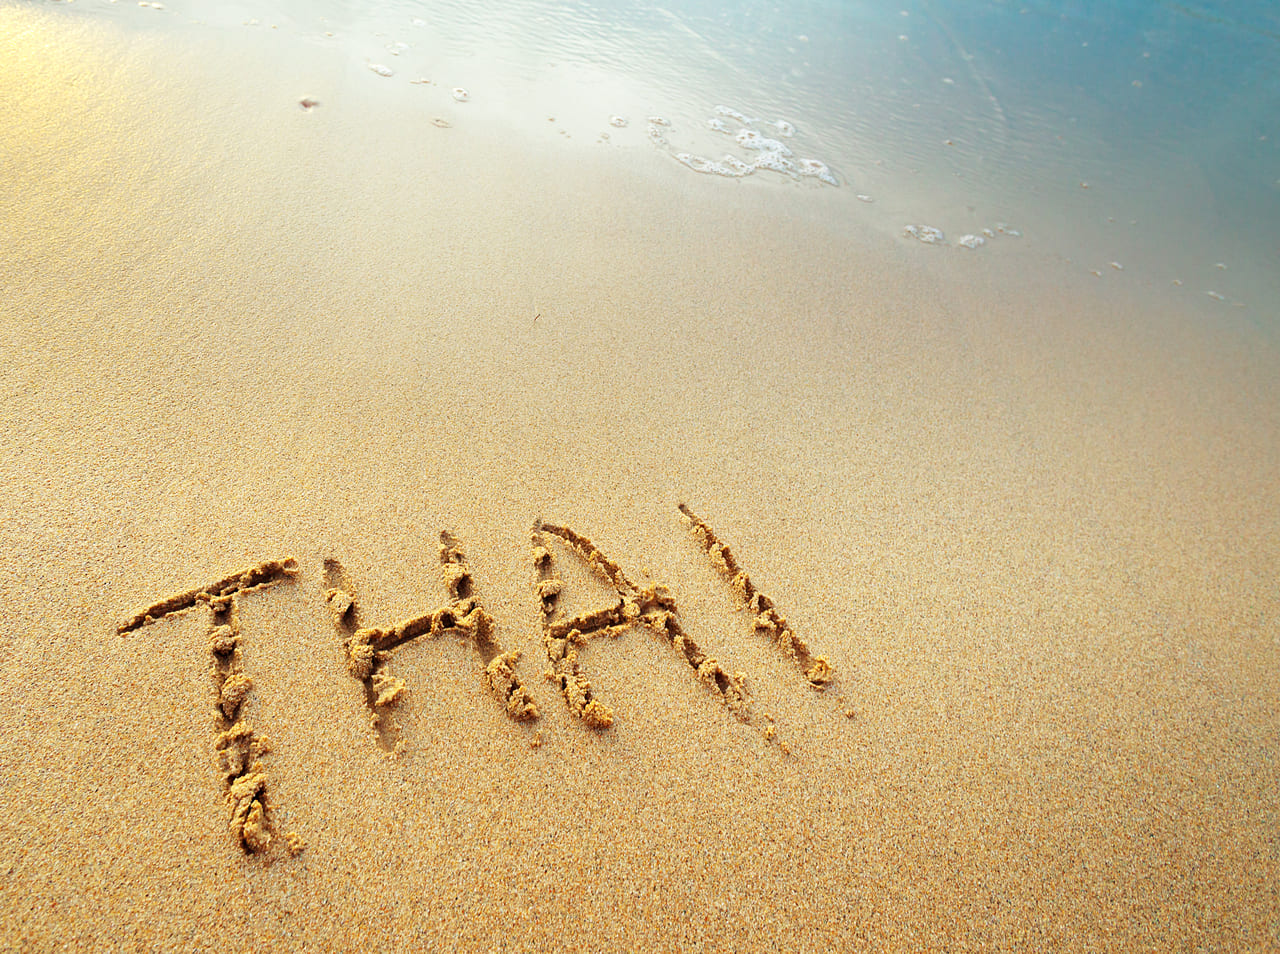 thai letters handwritten in sand on beach 2022 09 09 02 19 10 utc